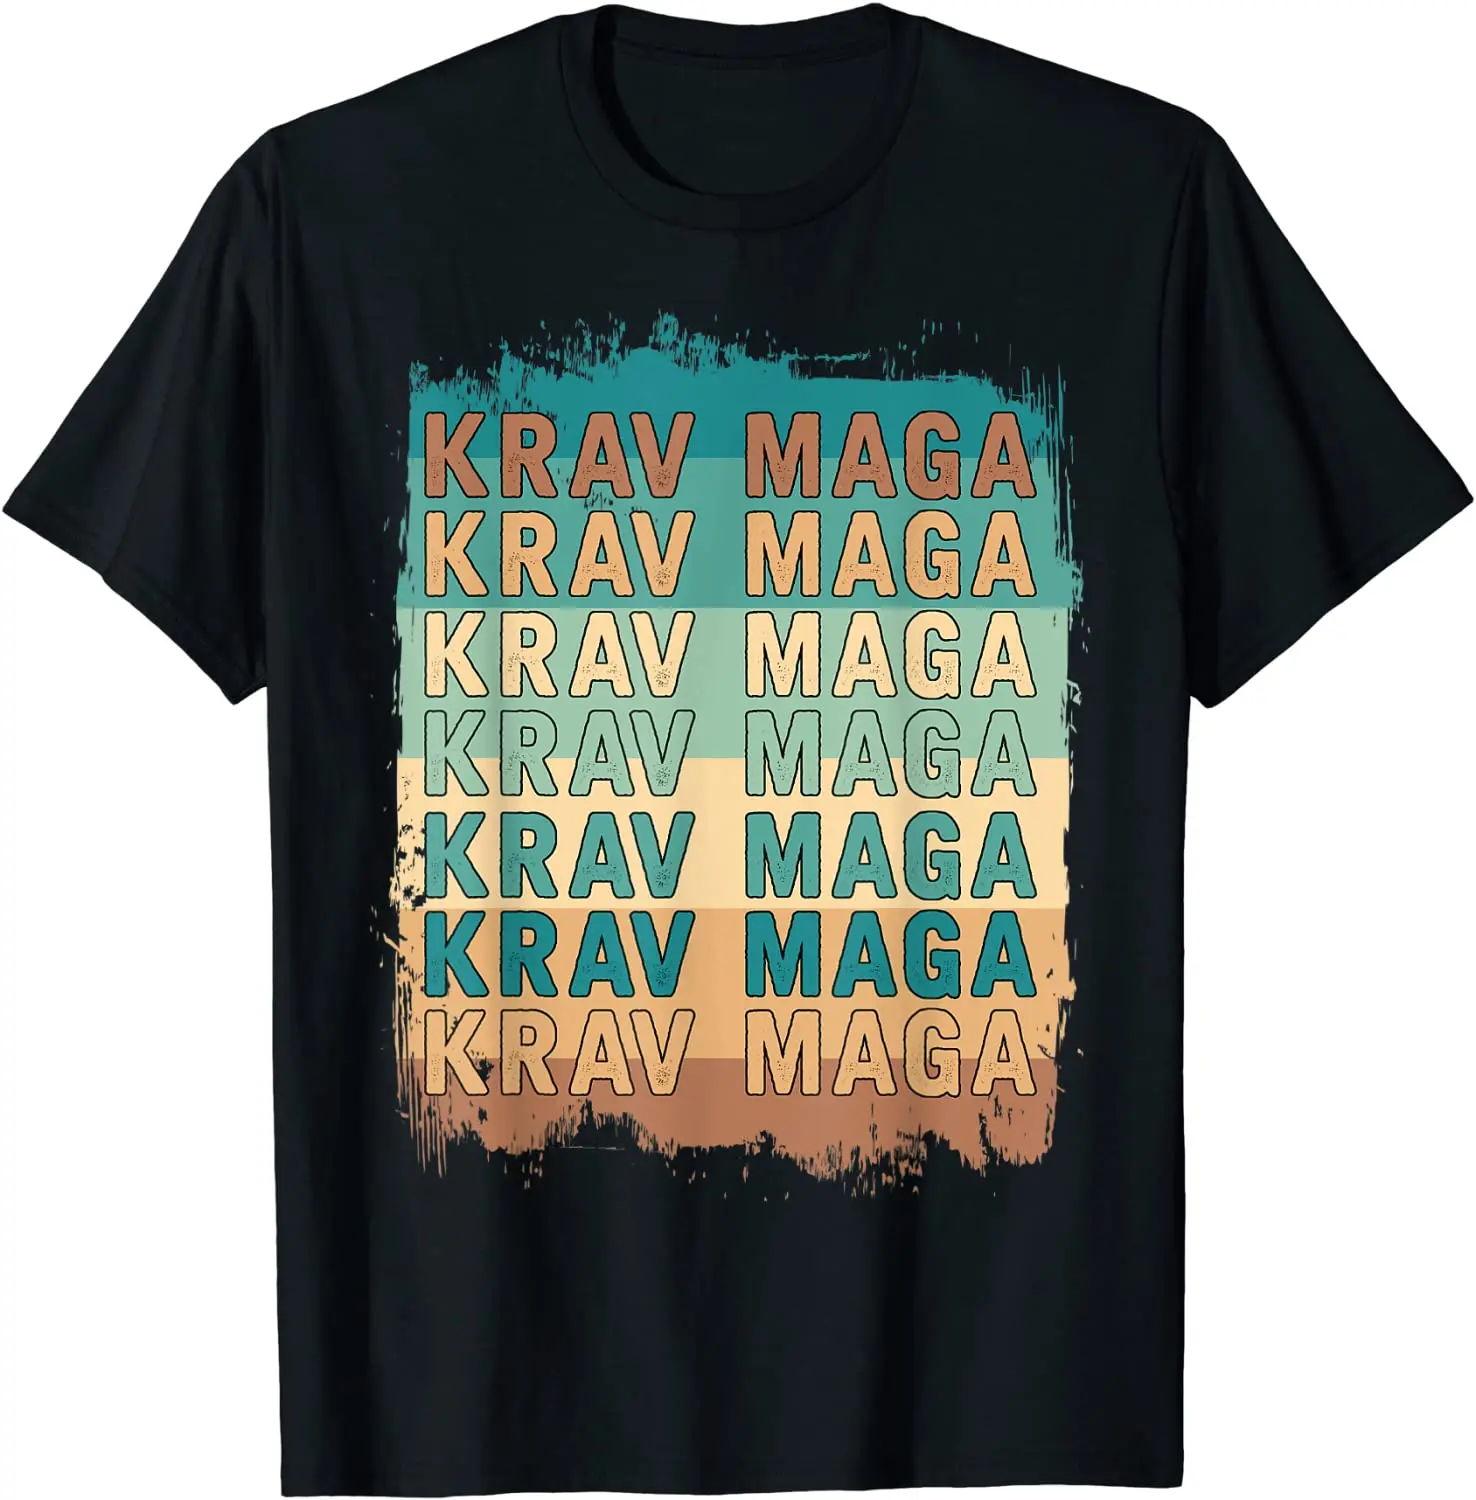 

Military Krav Maga Fighter Men T-Shirt Short Sleeve Casual Cotton O-Neck Summer TShirt